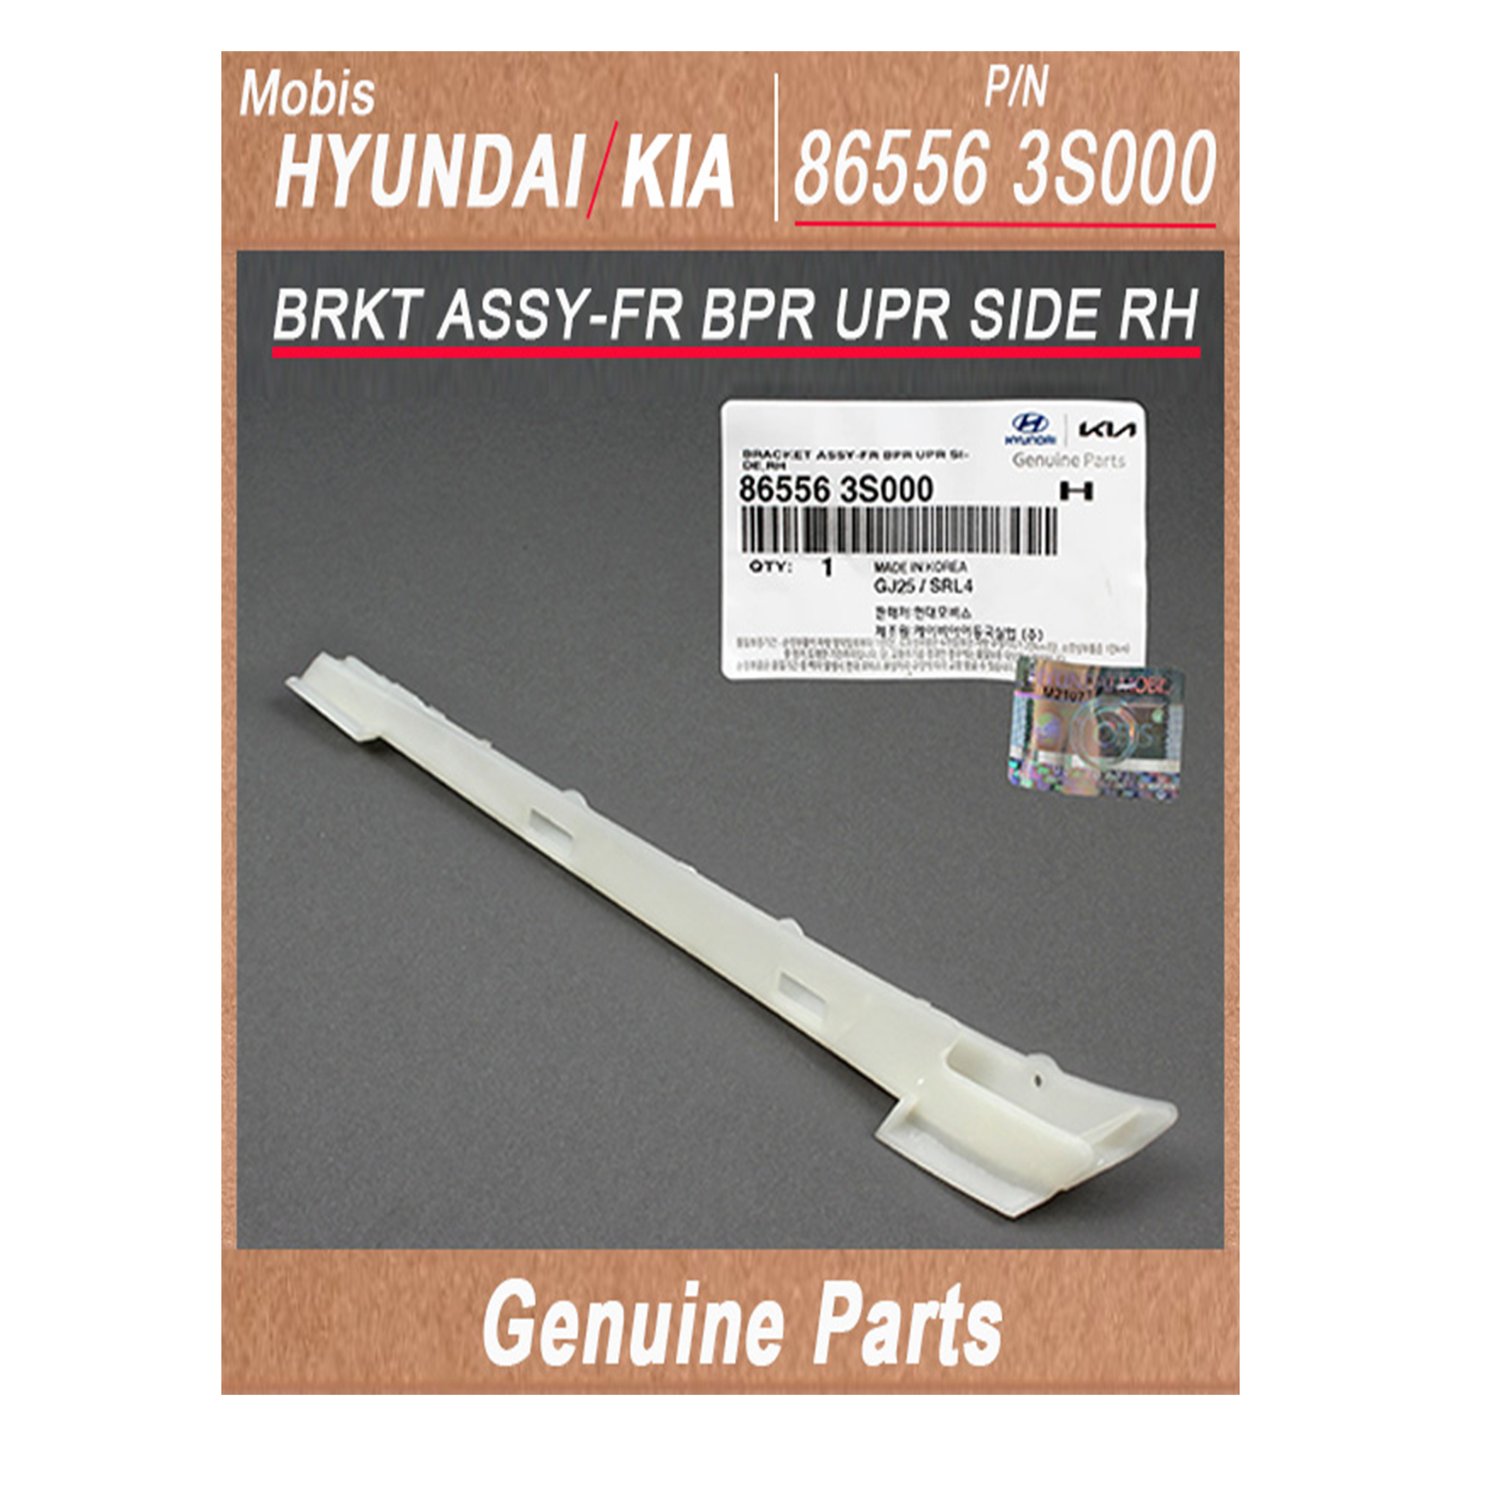 865563S000 _ BRKT ASSY_FR BPR UPR SIDE RH _ Genuine Korean Automotive Spare Parts _ Hyundai Kia _Mob